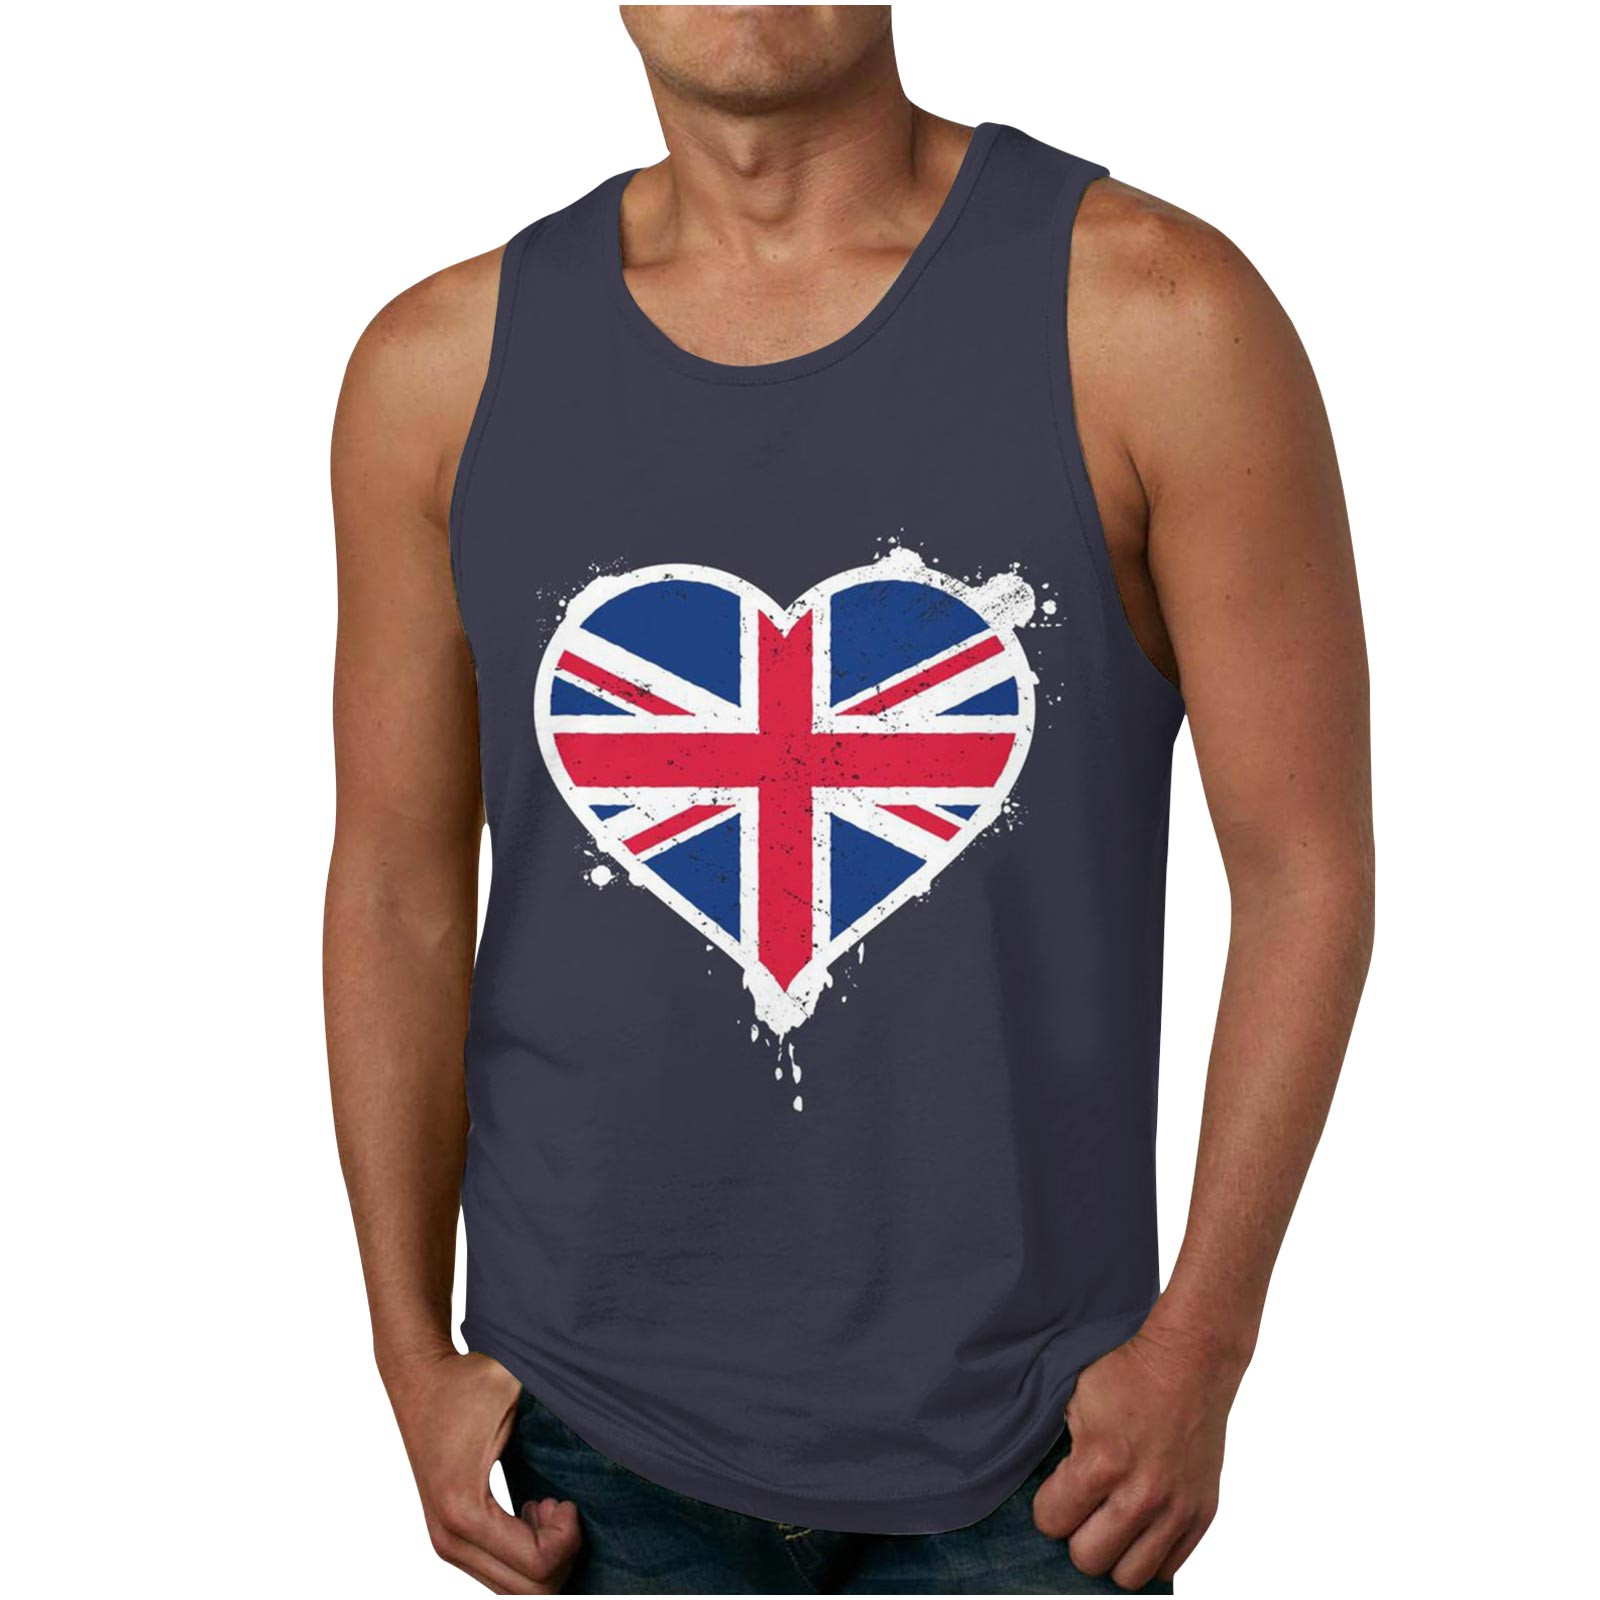 EDHITNR Mens Workout Shirts Fashion Crew Neck Sleeveless Patriotic Tank ...